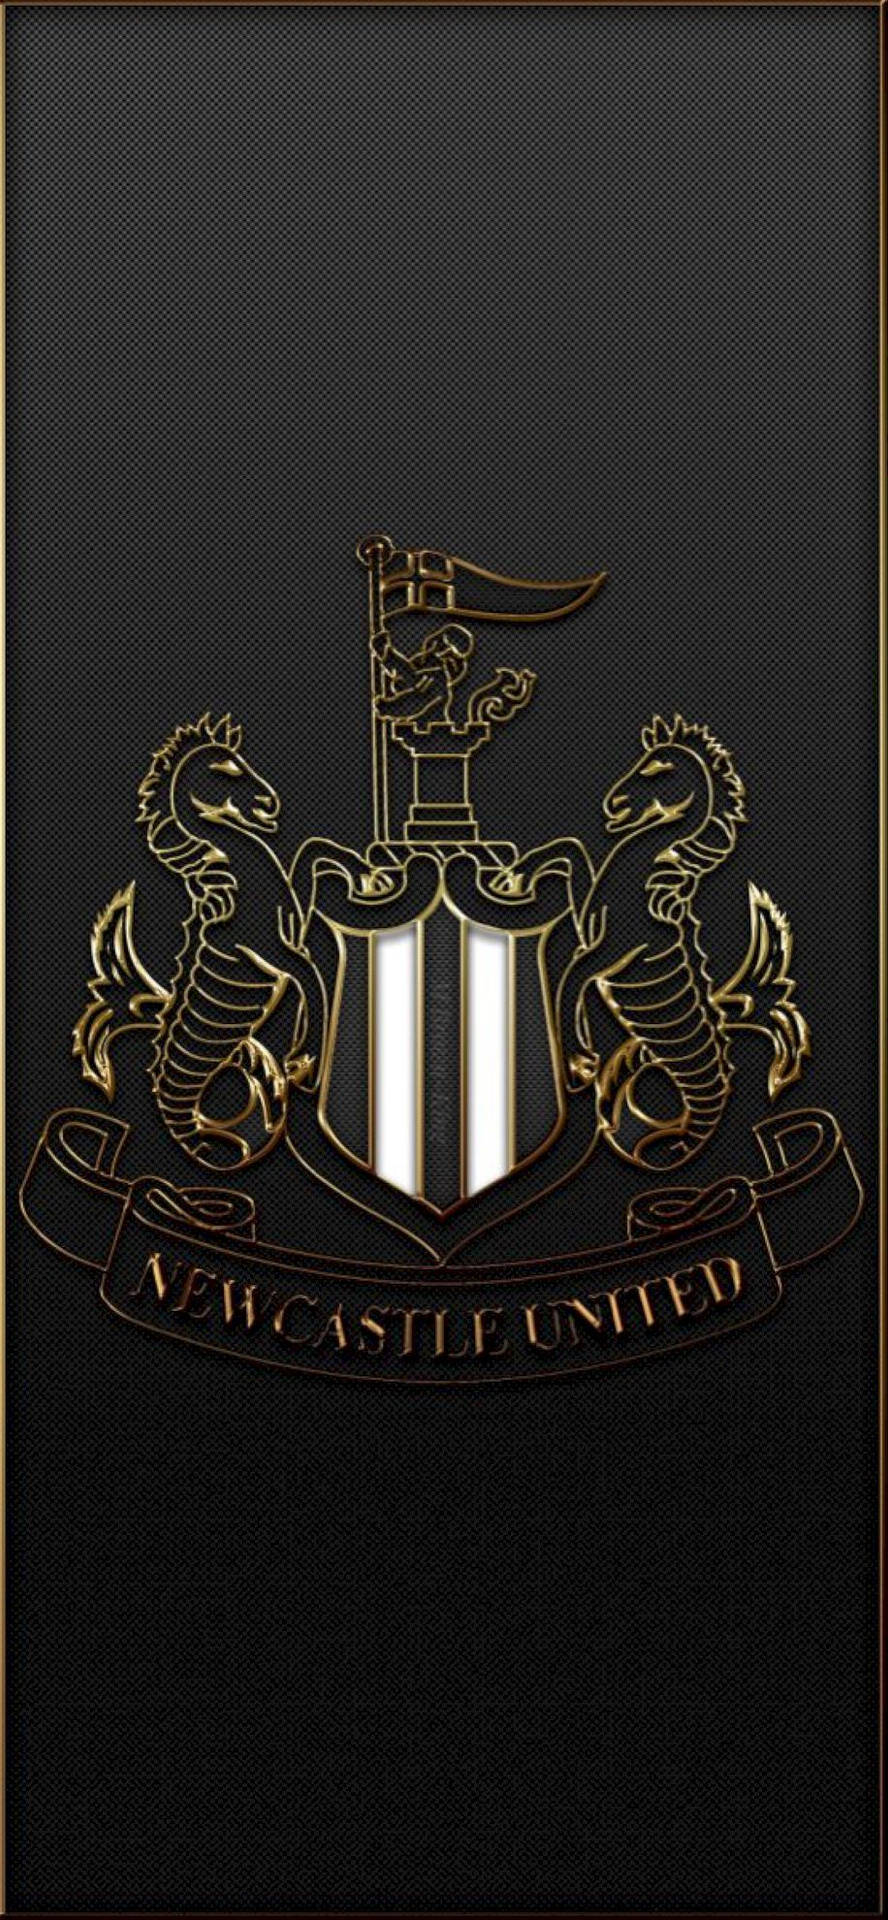 Neuesvereinslogo Des Newcastle United Fc In Geprägter Optik Wallpaper